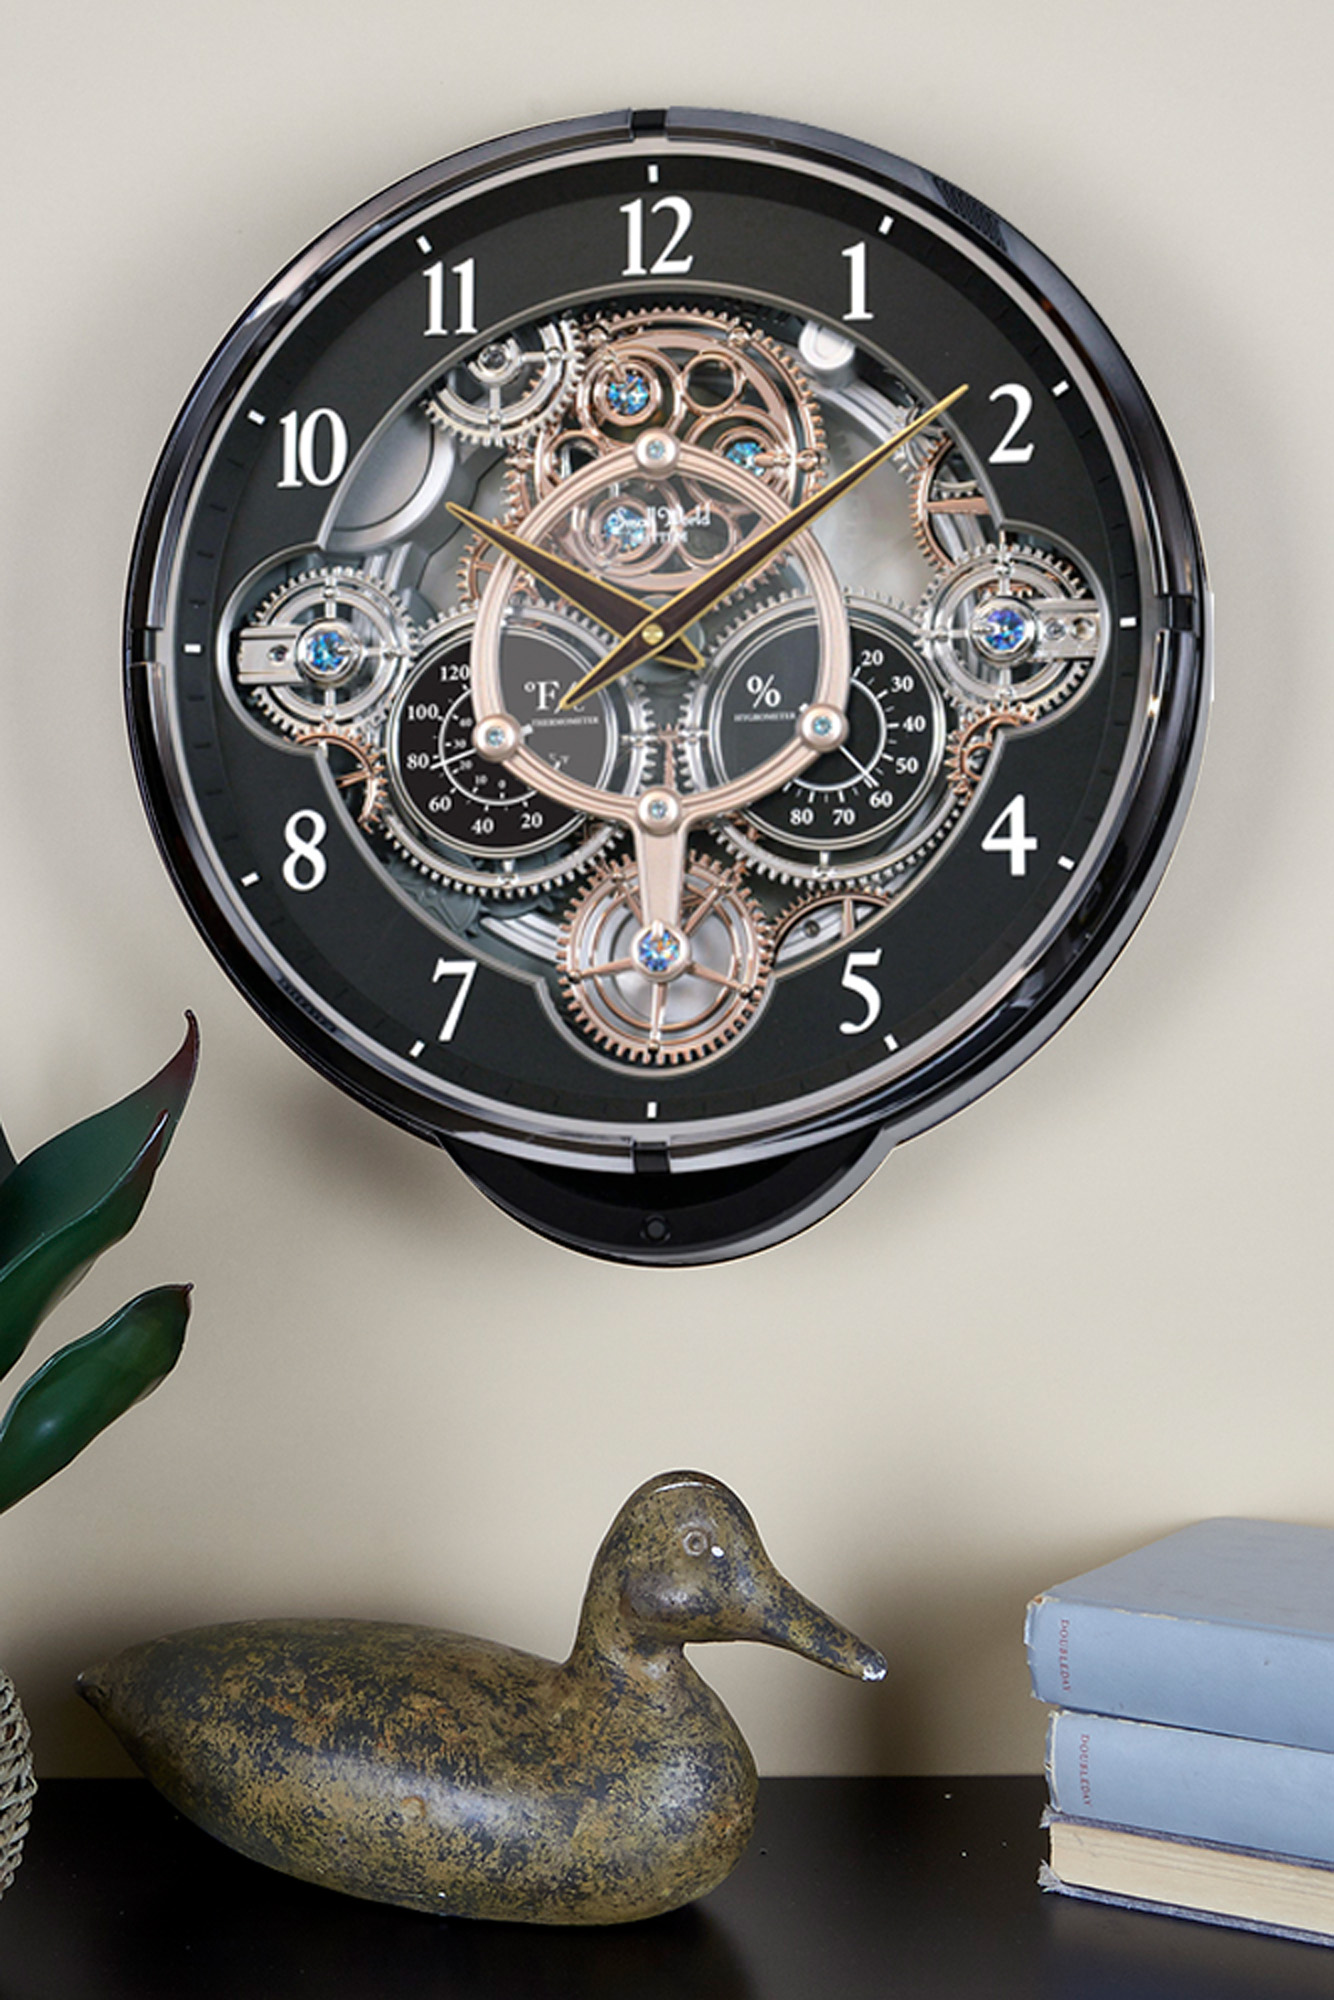 4MH442WU08 Rhythm USA Chronograph Clock